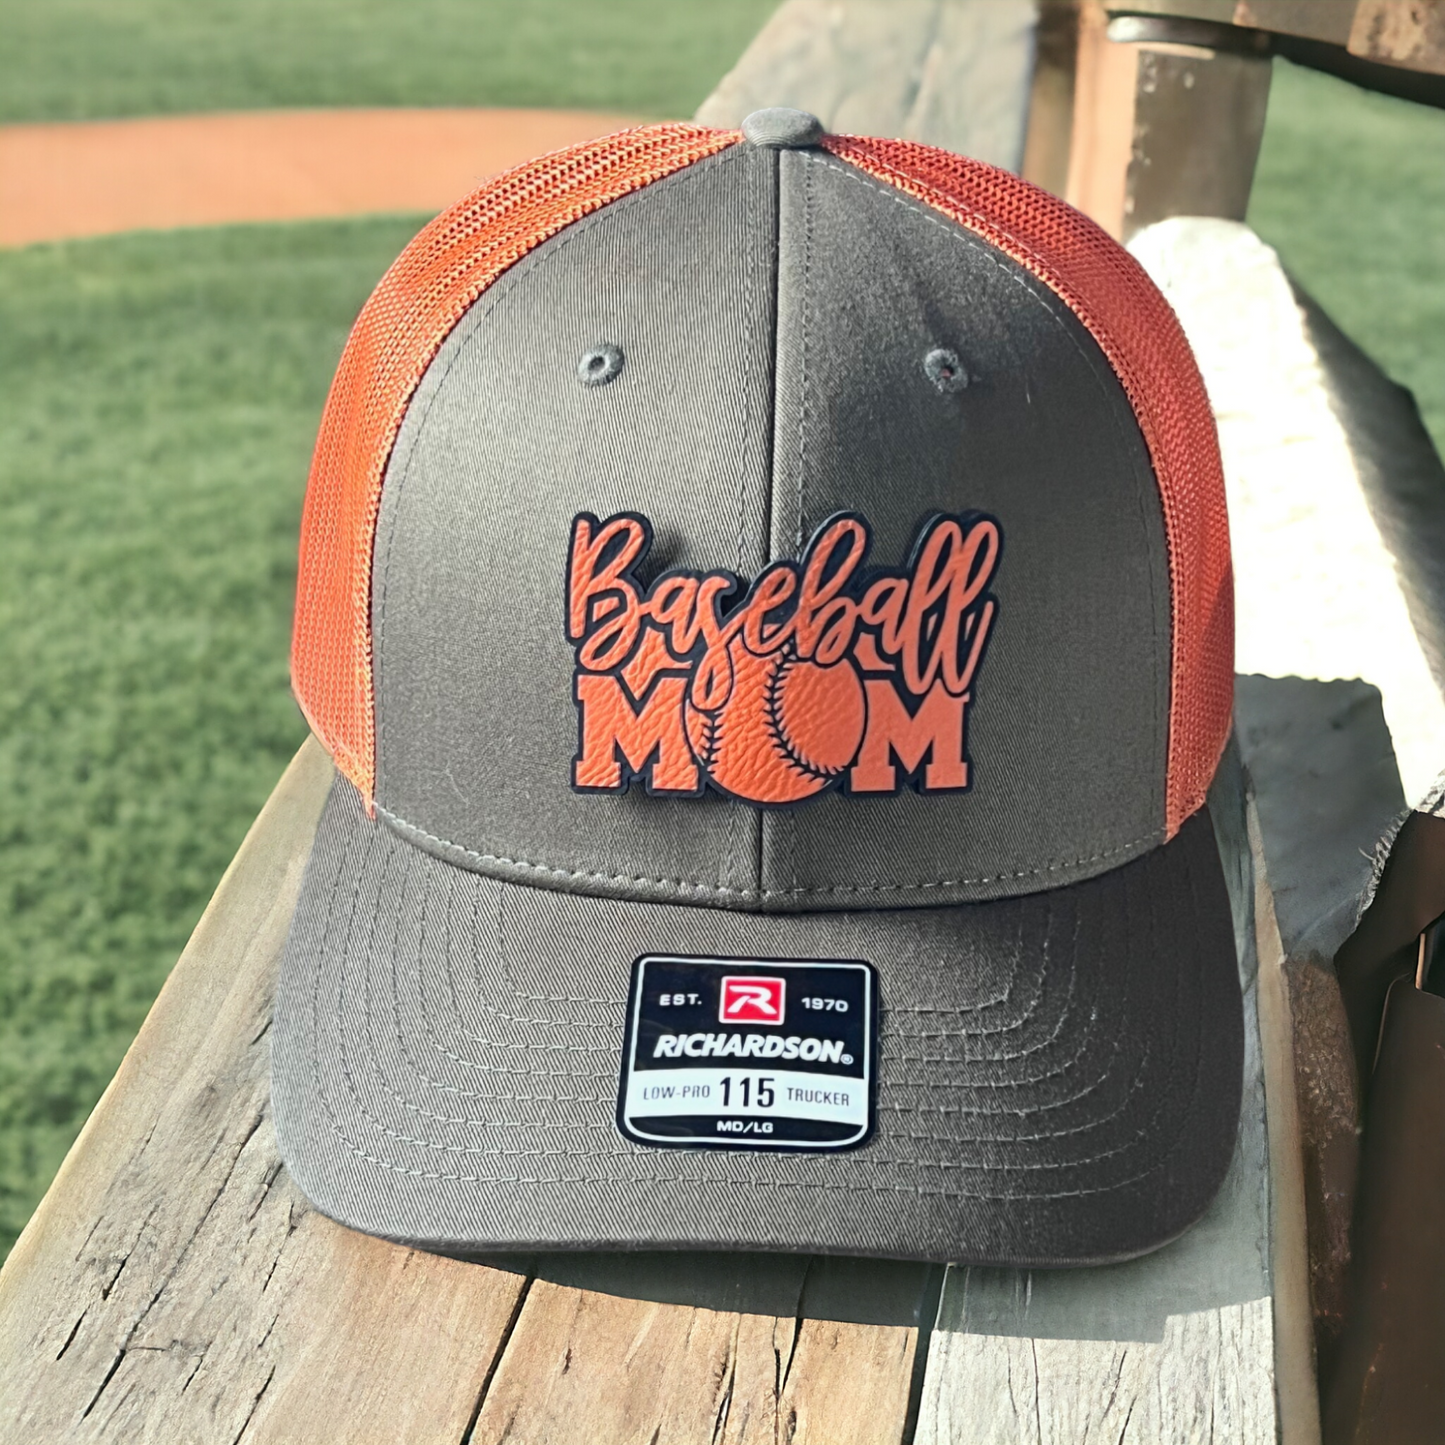 Baseball Mom Low Pro Trucker Cap - 115 - Your Logo